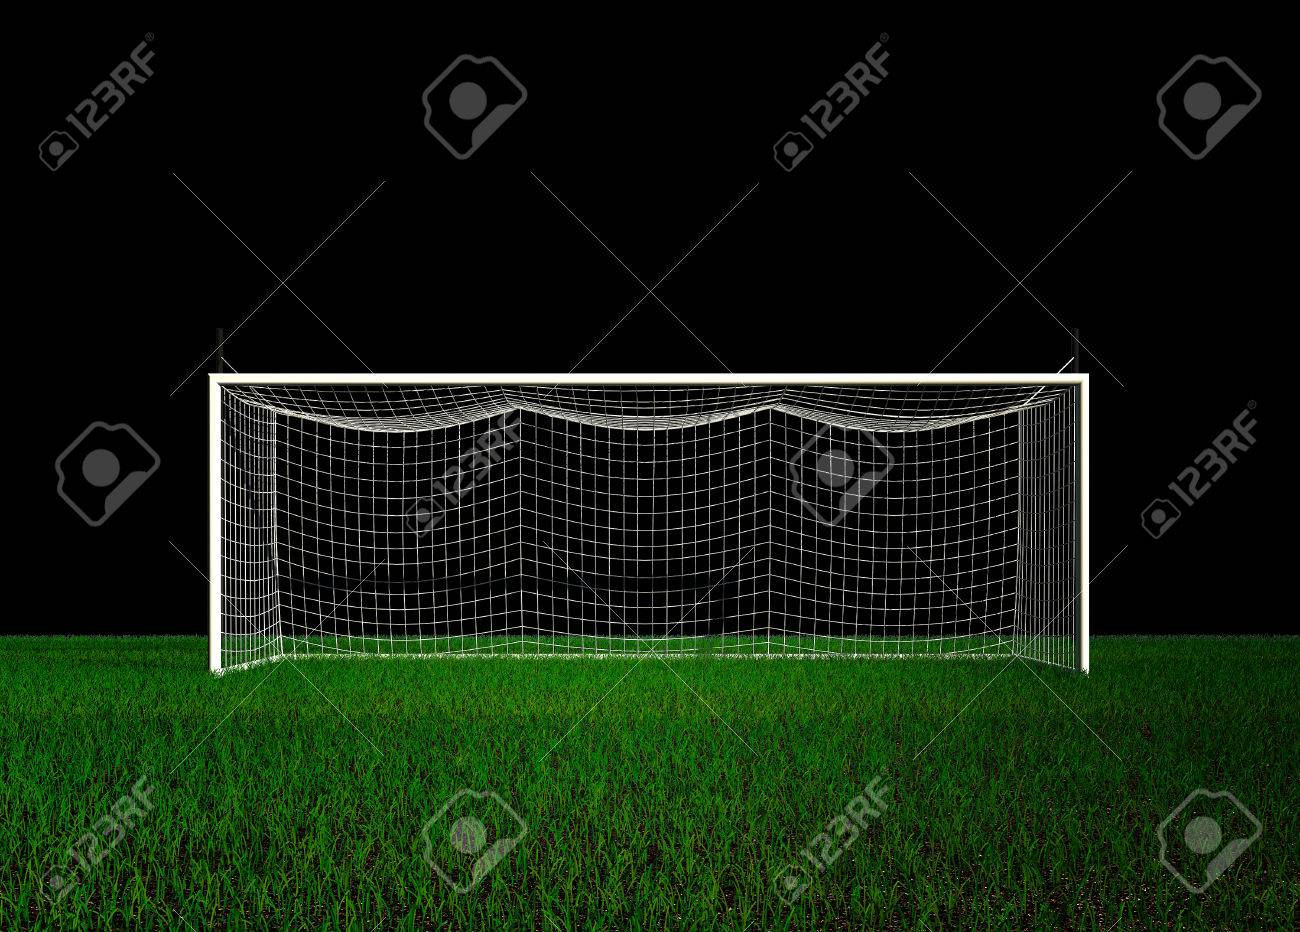 Football Goal On Black Background 3d Rendering Stock Photo